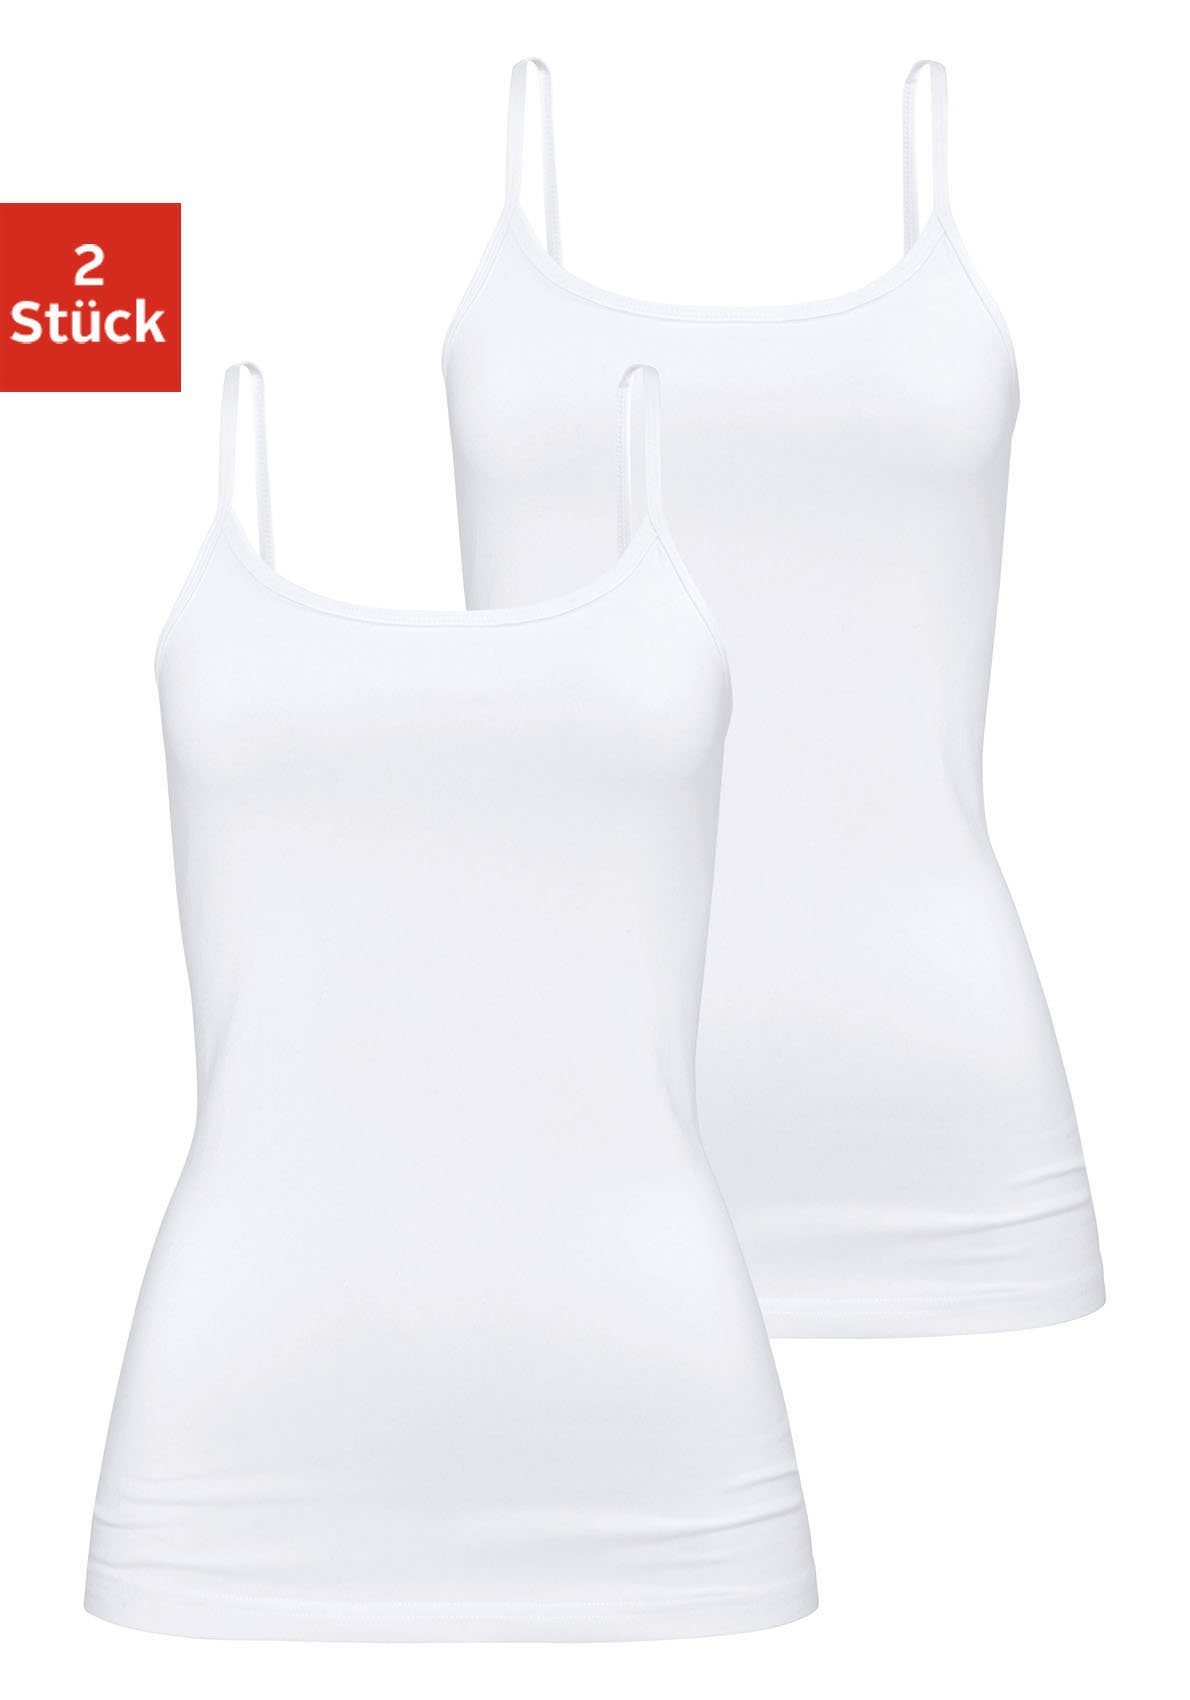 H.I.S Unterhemd Baumwoll-Qualität, Spaghettiträger-Top, weiß Unterziehshirt (2er-Pack) aus elastischer